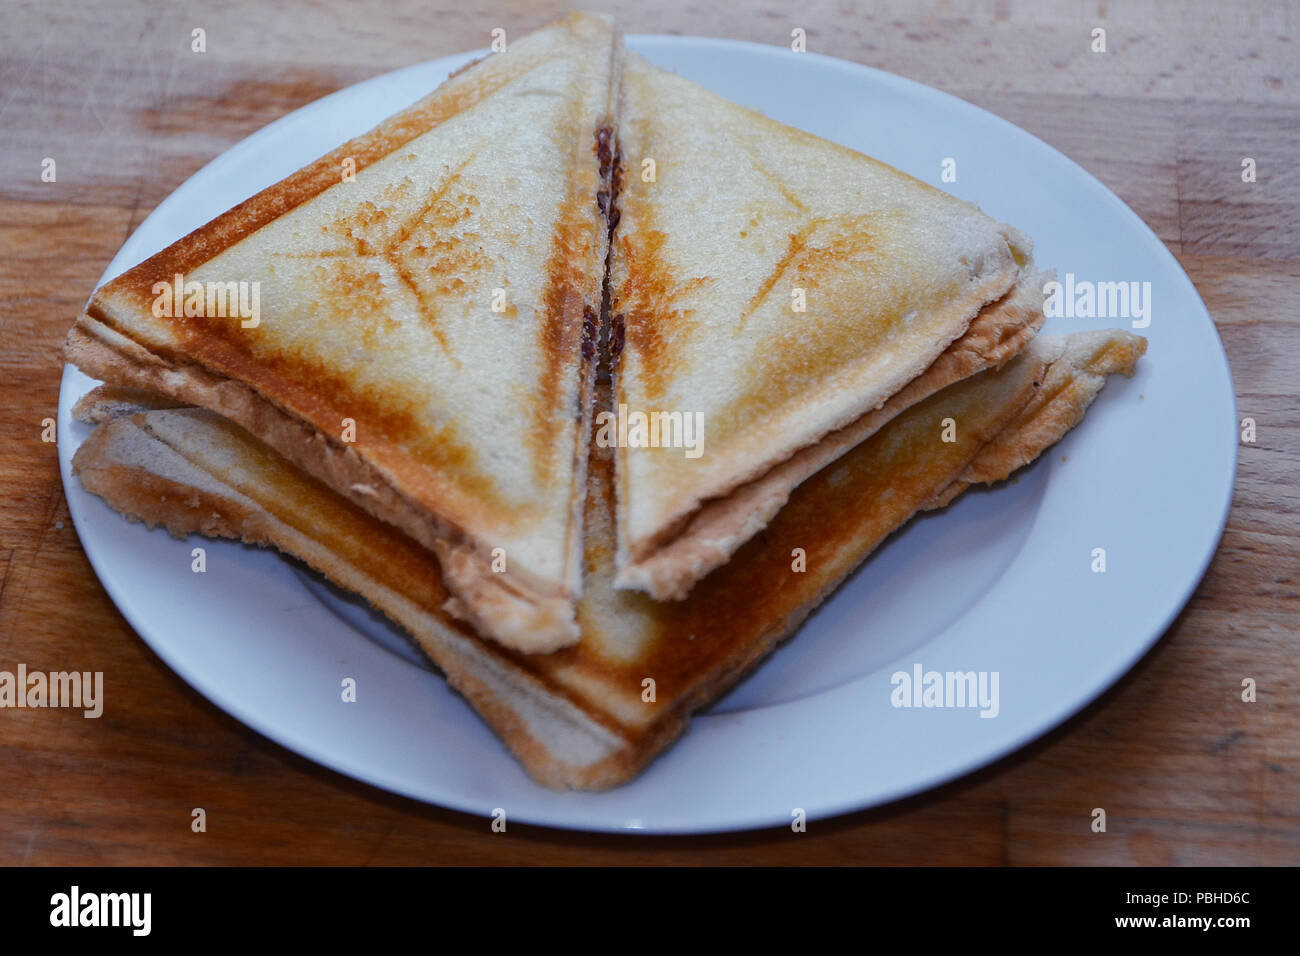 https://c8.alamy.com/comp/PBHD6C/deep-filled-toasted-sandwich-PBHD6C.jpg